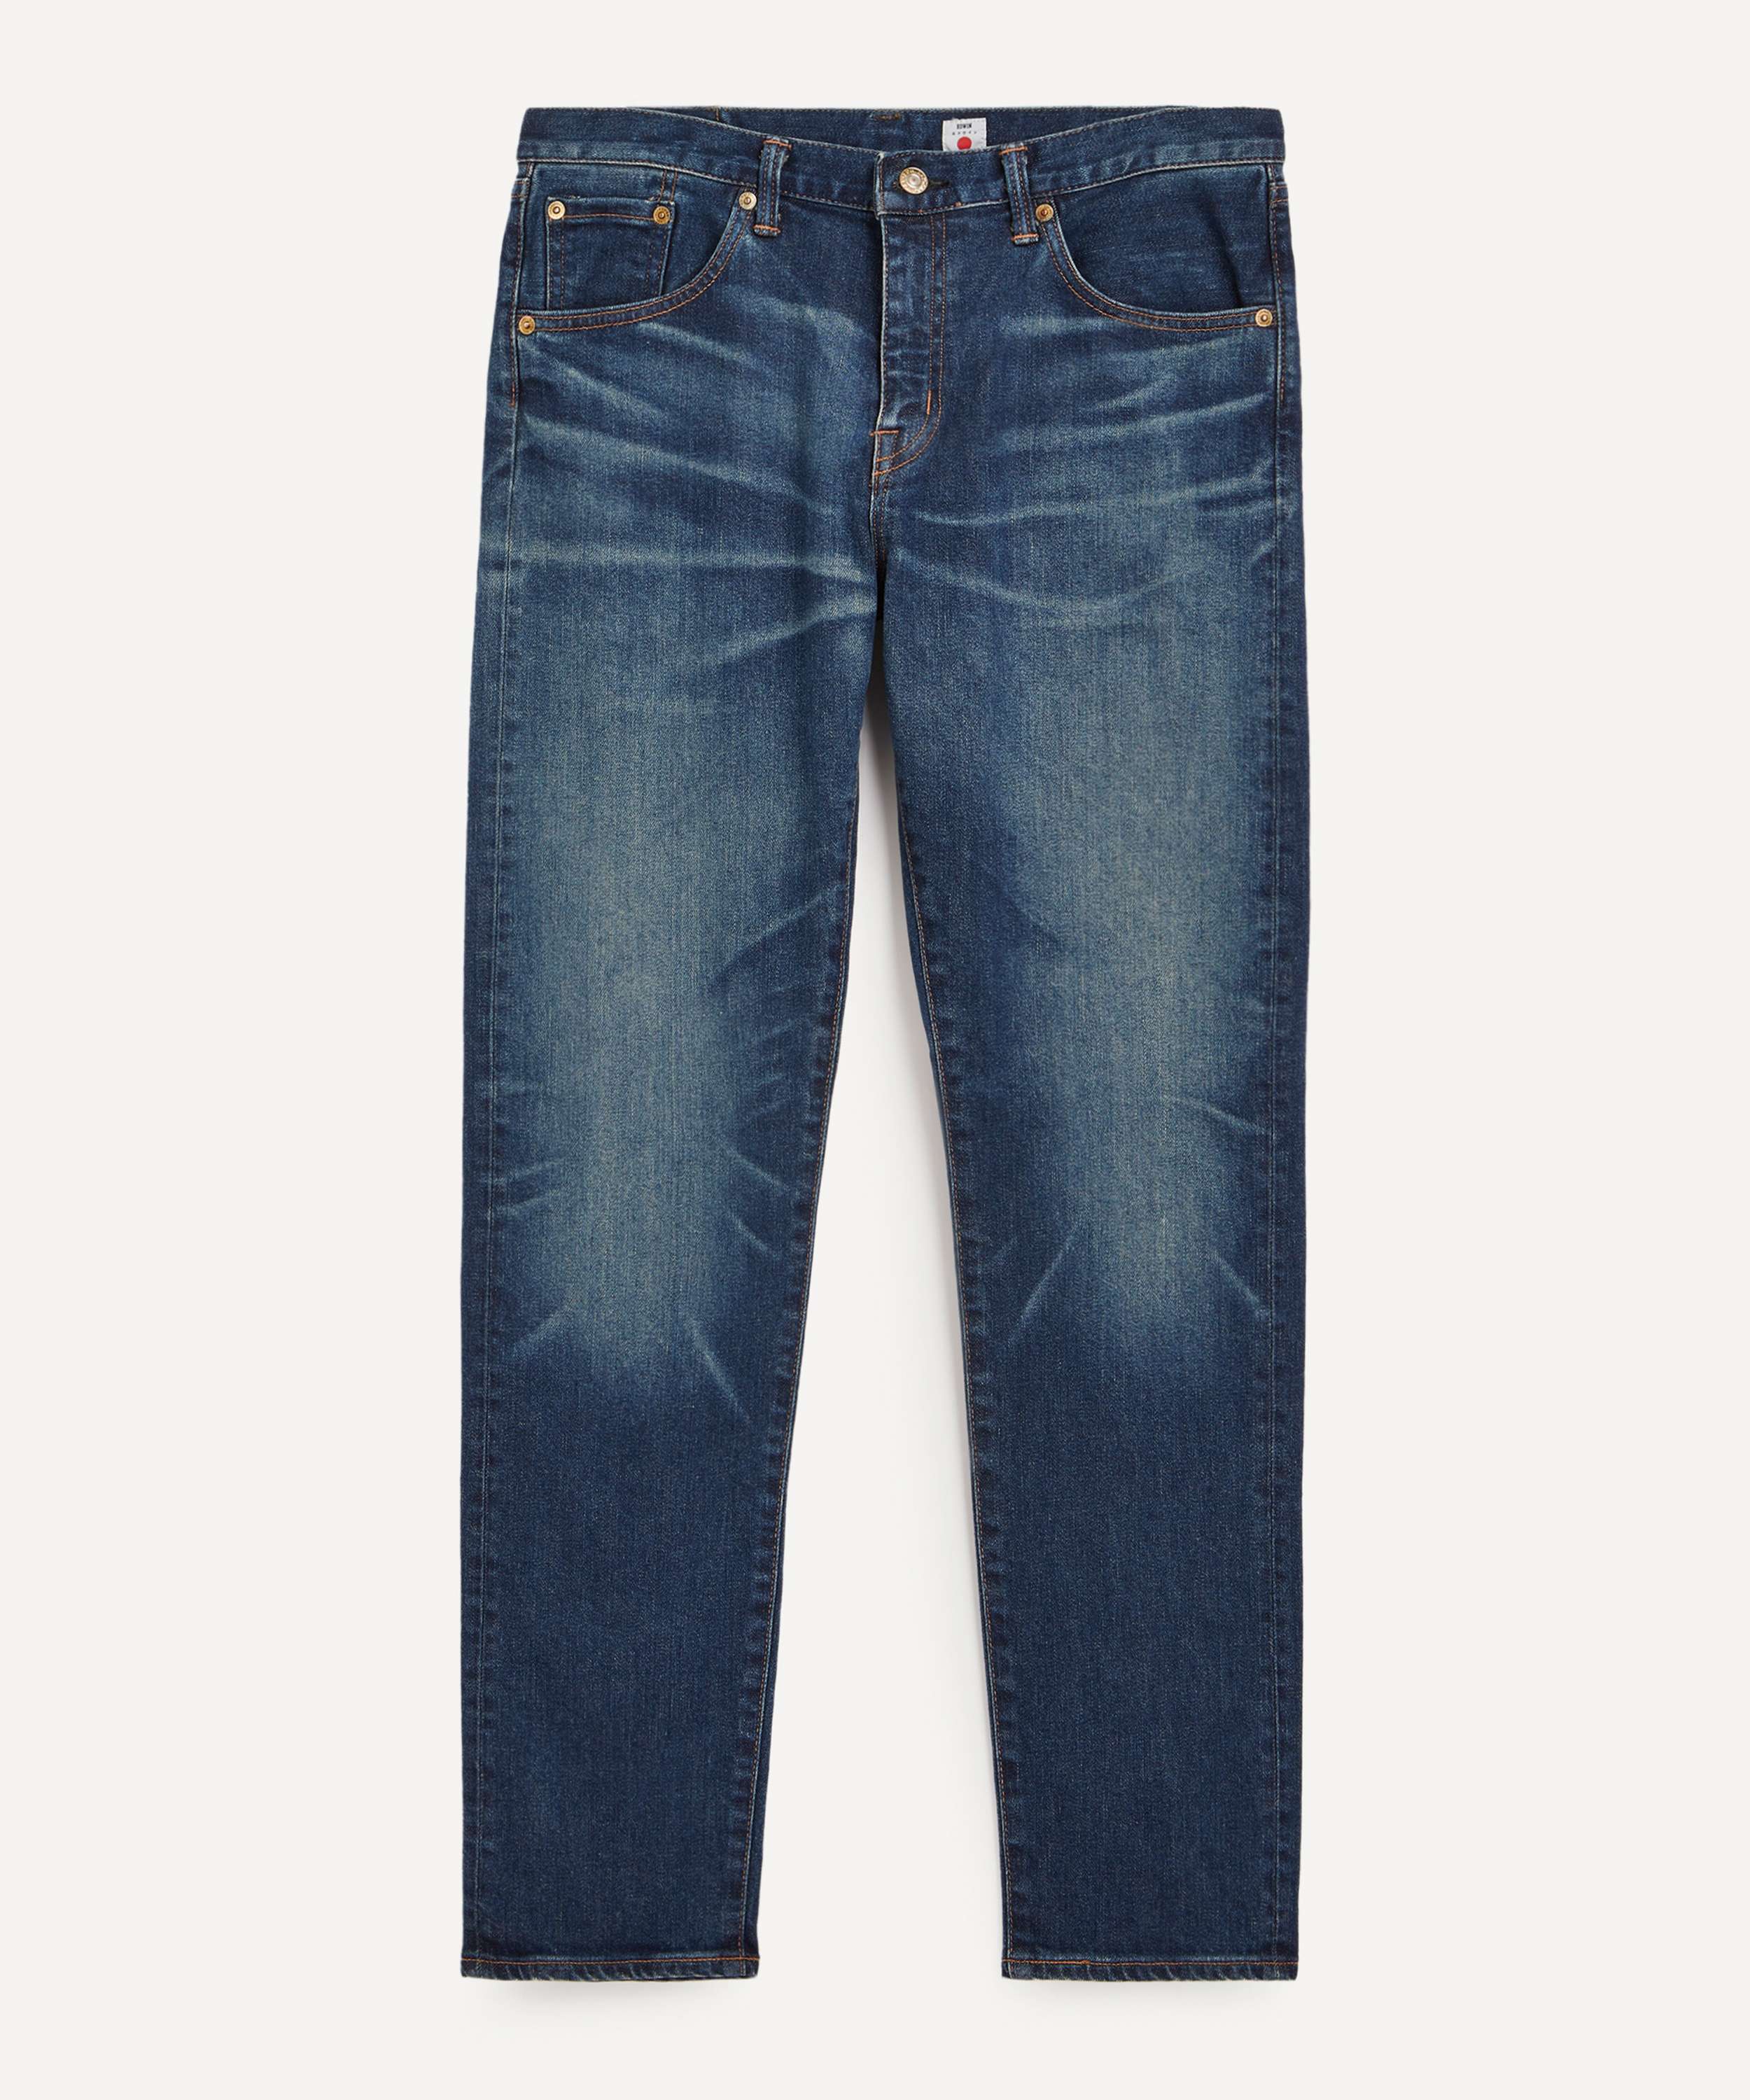 Men's Jeans Purple Brand jeans designer Anti Slim Fit fashiion true Hot